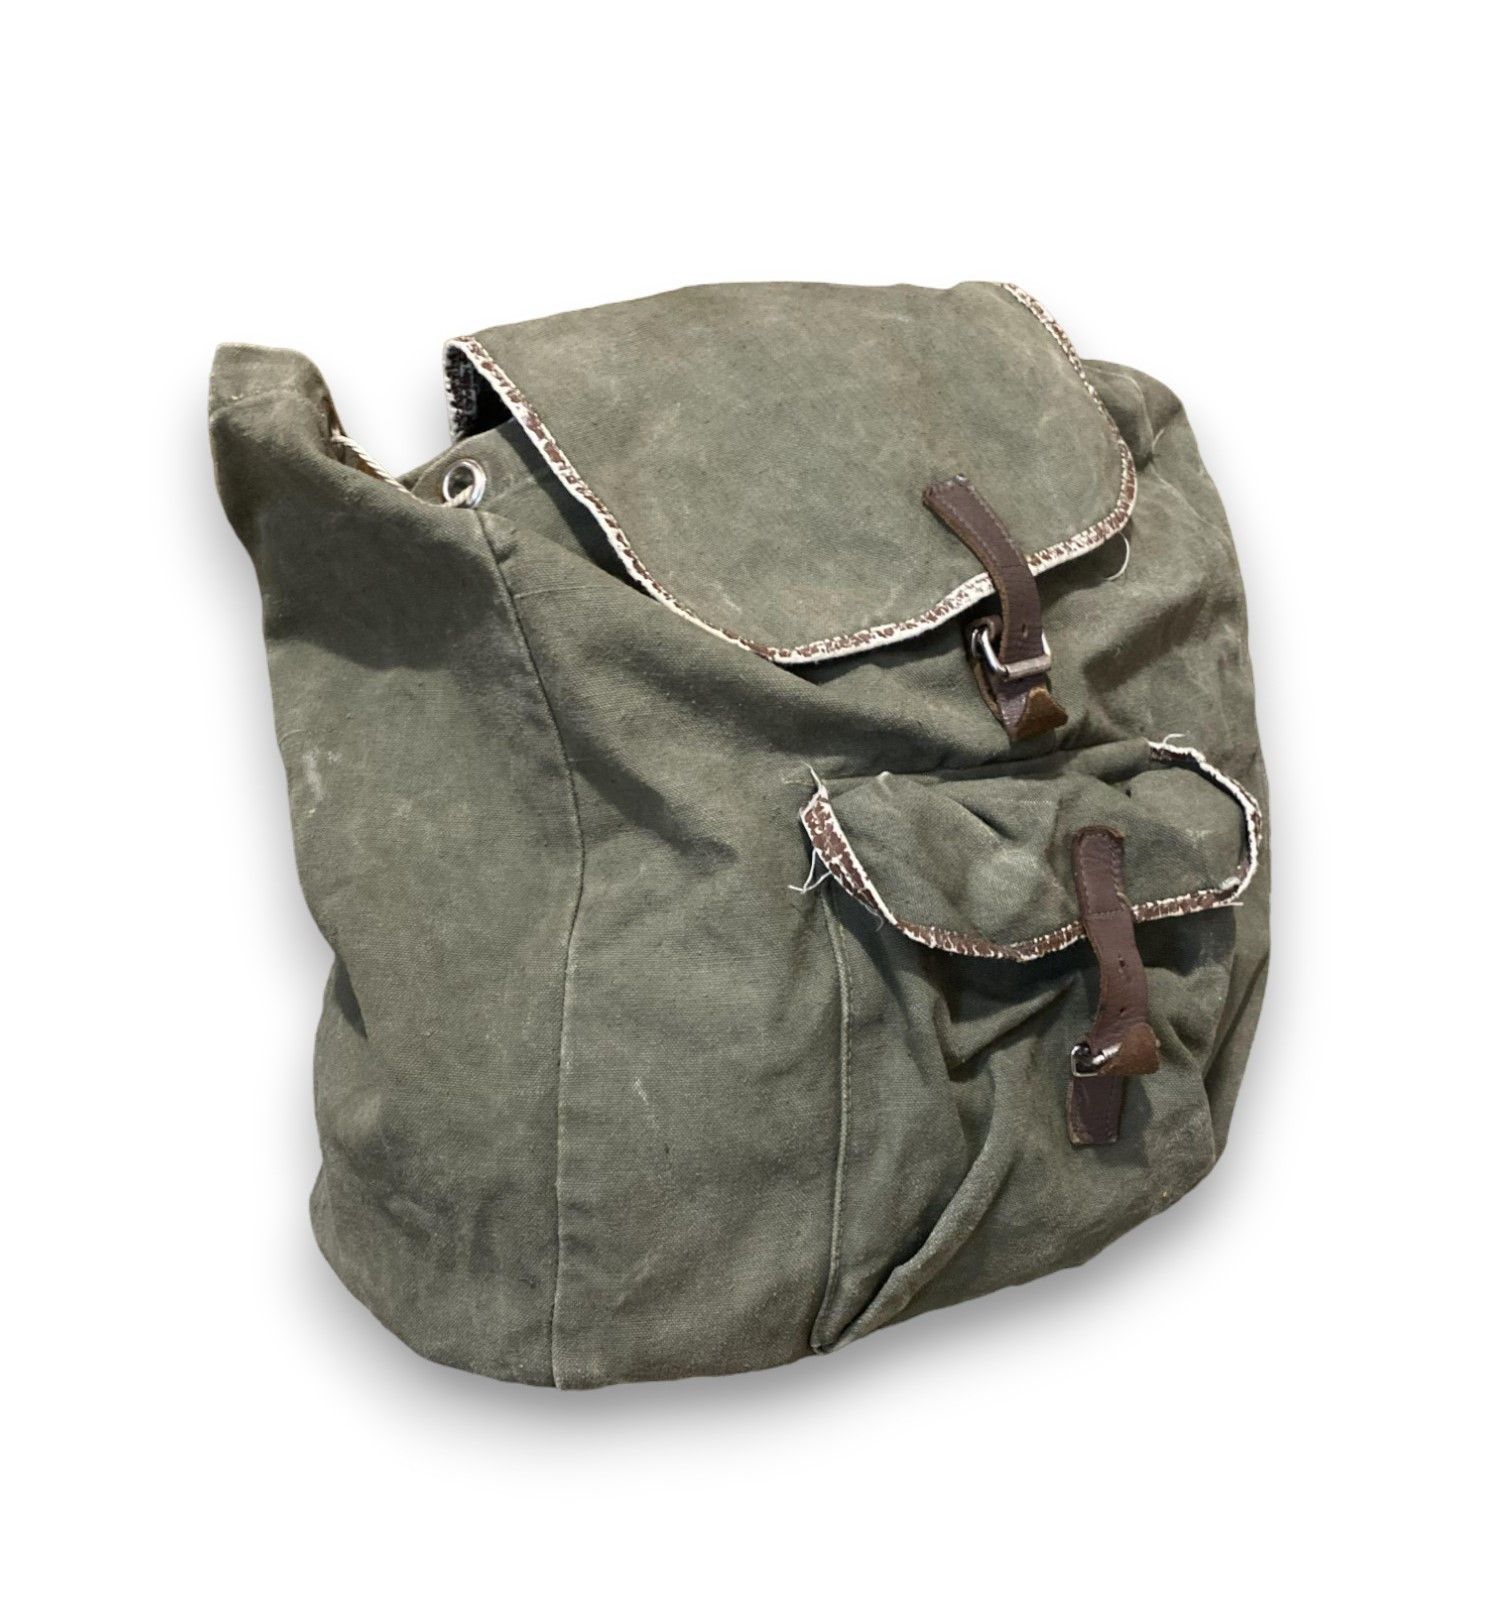 USSR Backpack Rucksack Military Hiking Vintage Rare Green - 5